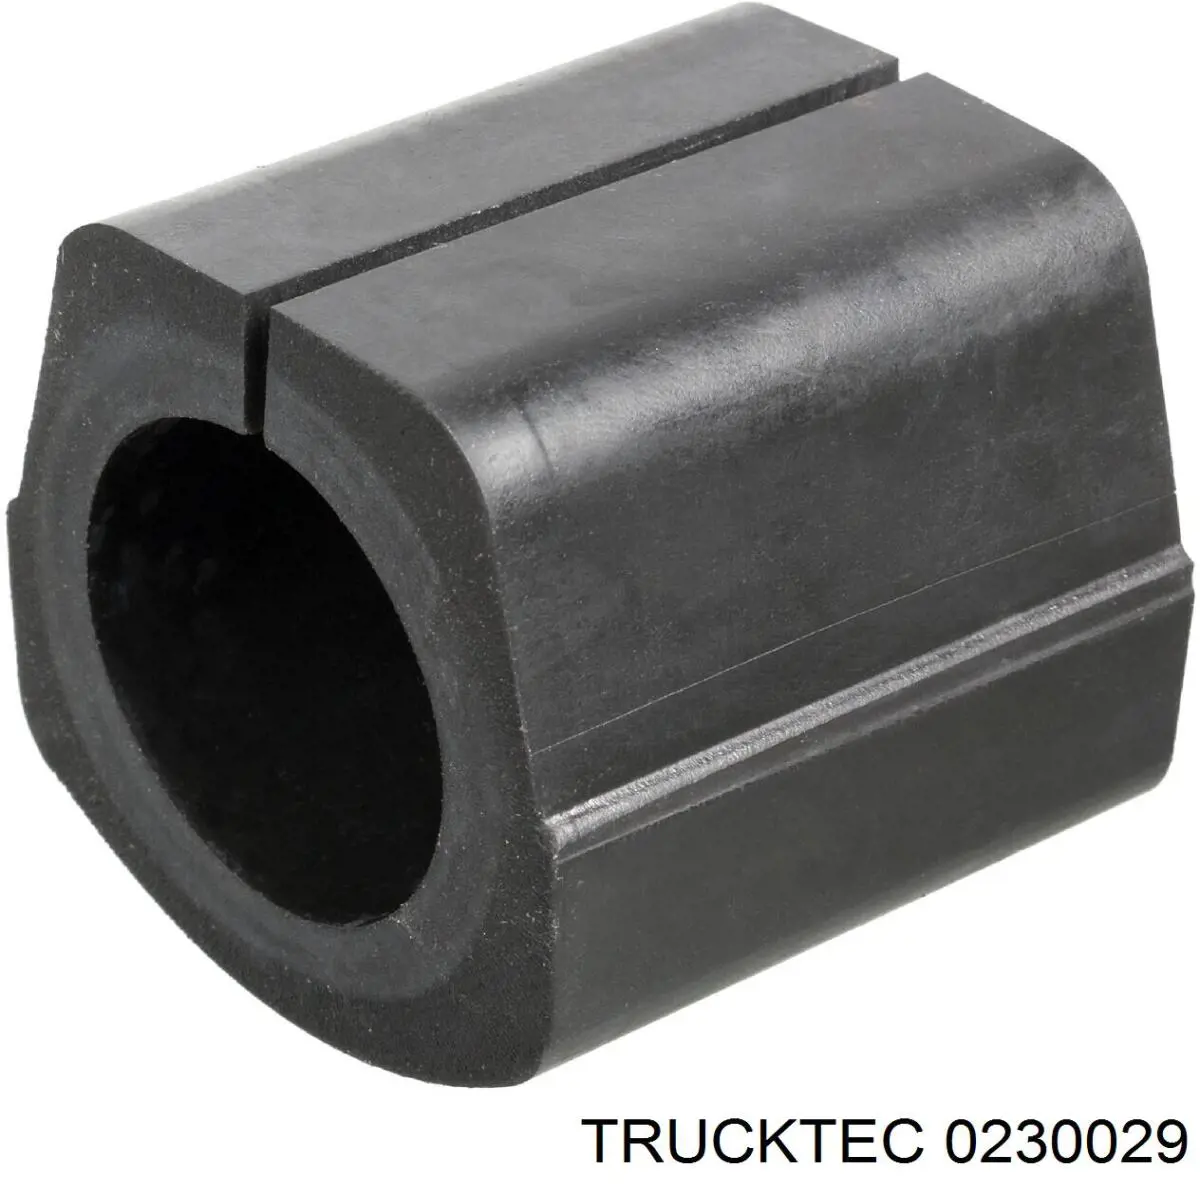 02.30.029 Trucktec casquillo de barra estabilizadora delantera